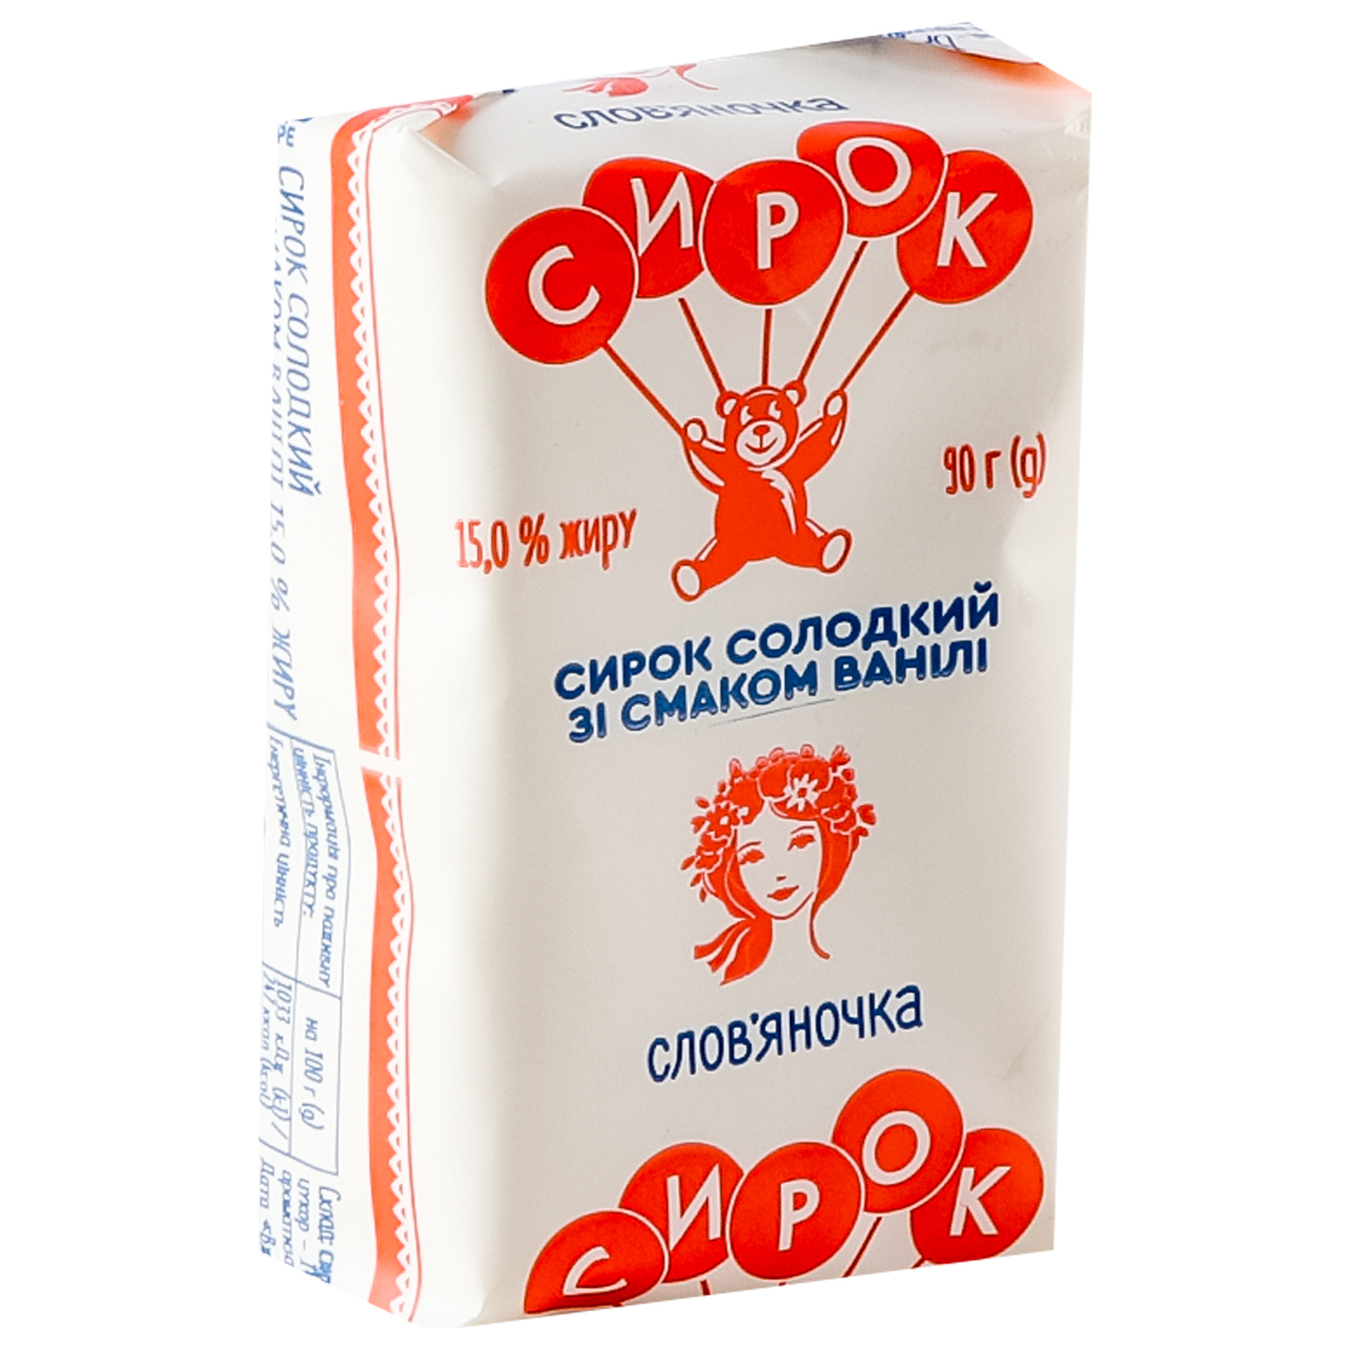 Slavyanochka cottage cheese with vanilla flavor sweet 0,15 90g 9